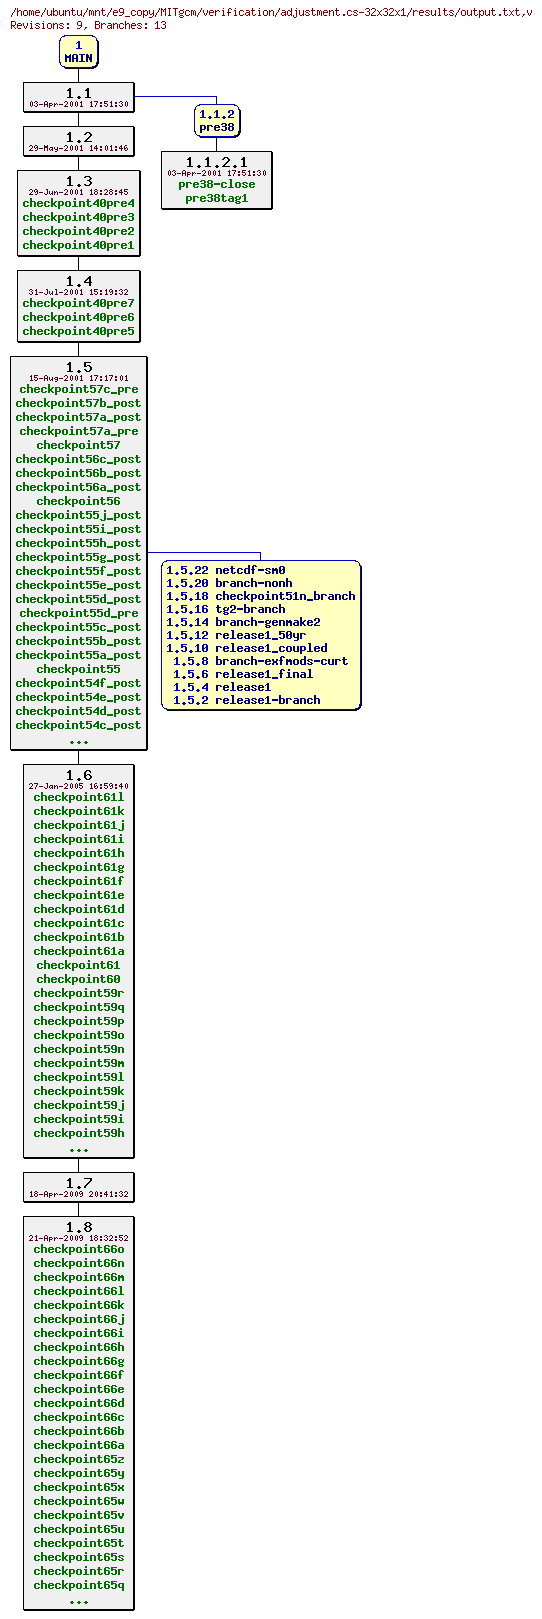 Revisions of MITgcm/verification/adjustment.cs-32x32x1/results/output.txt